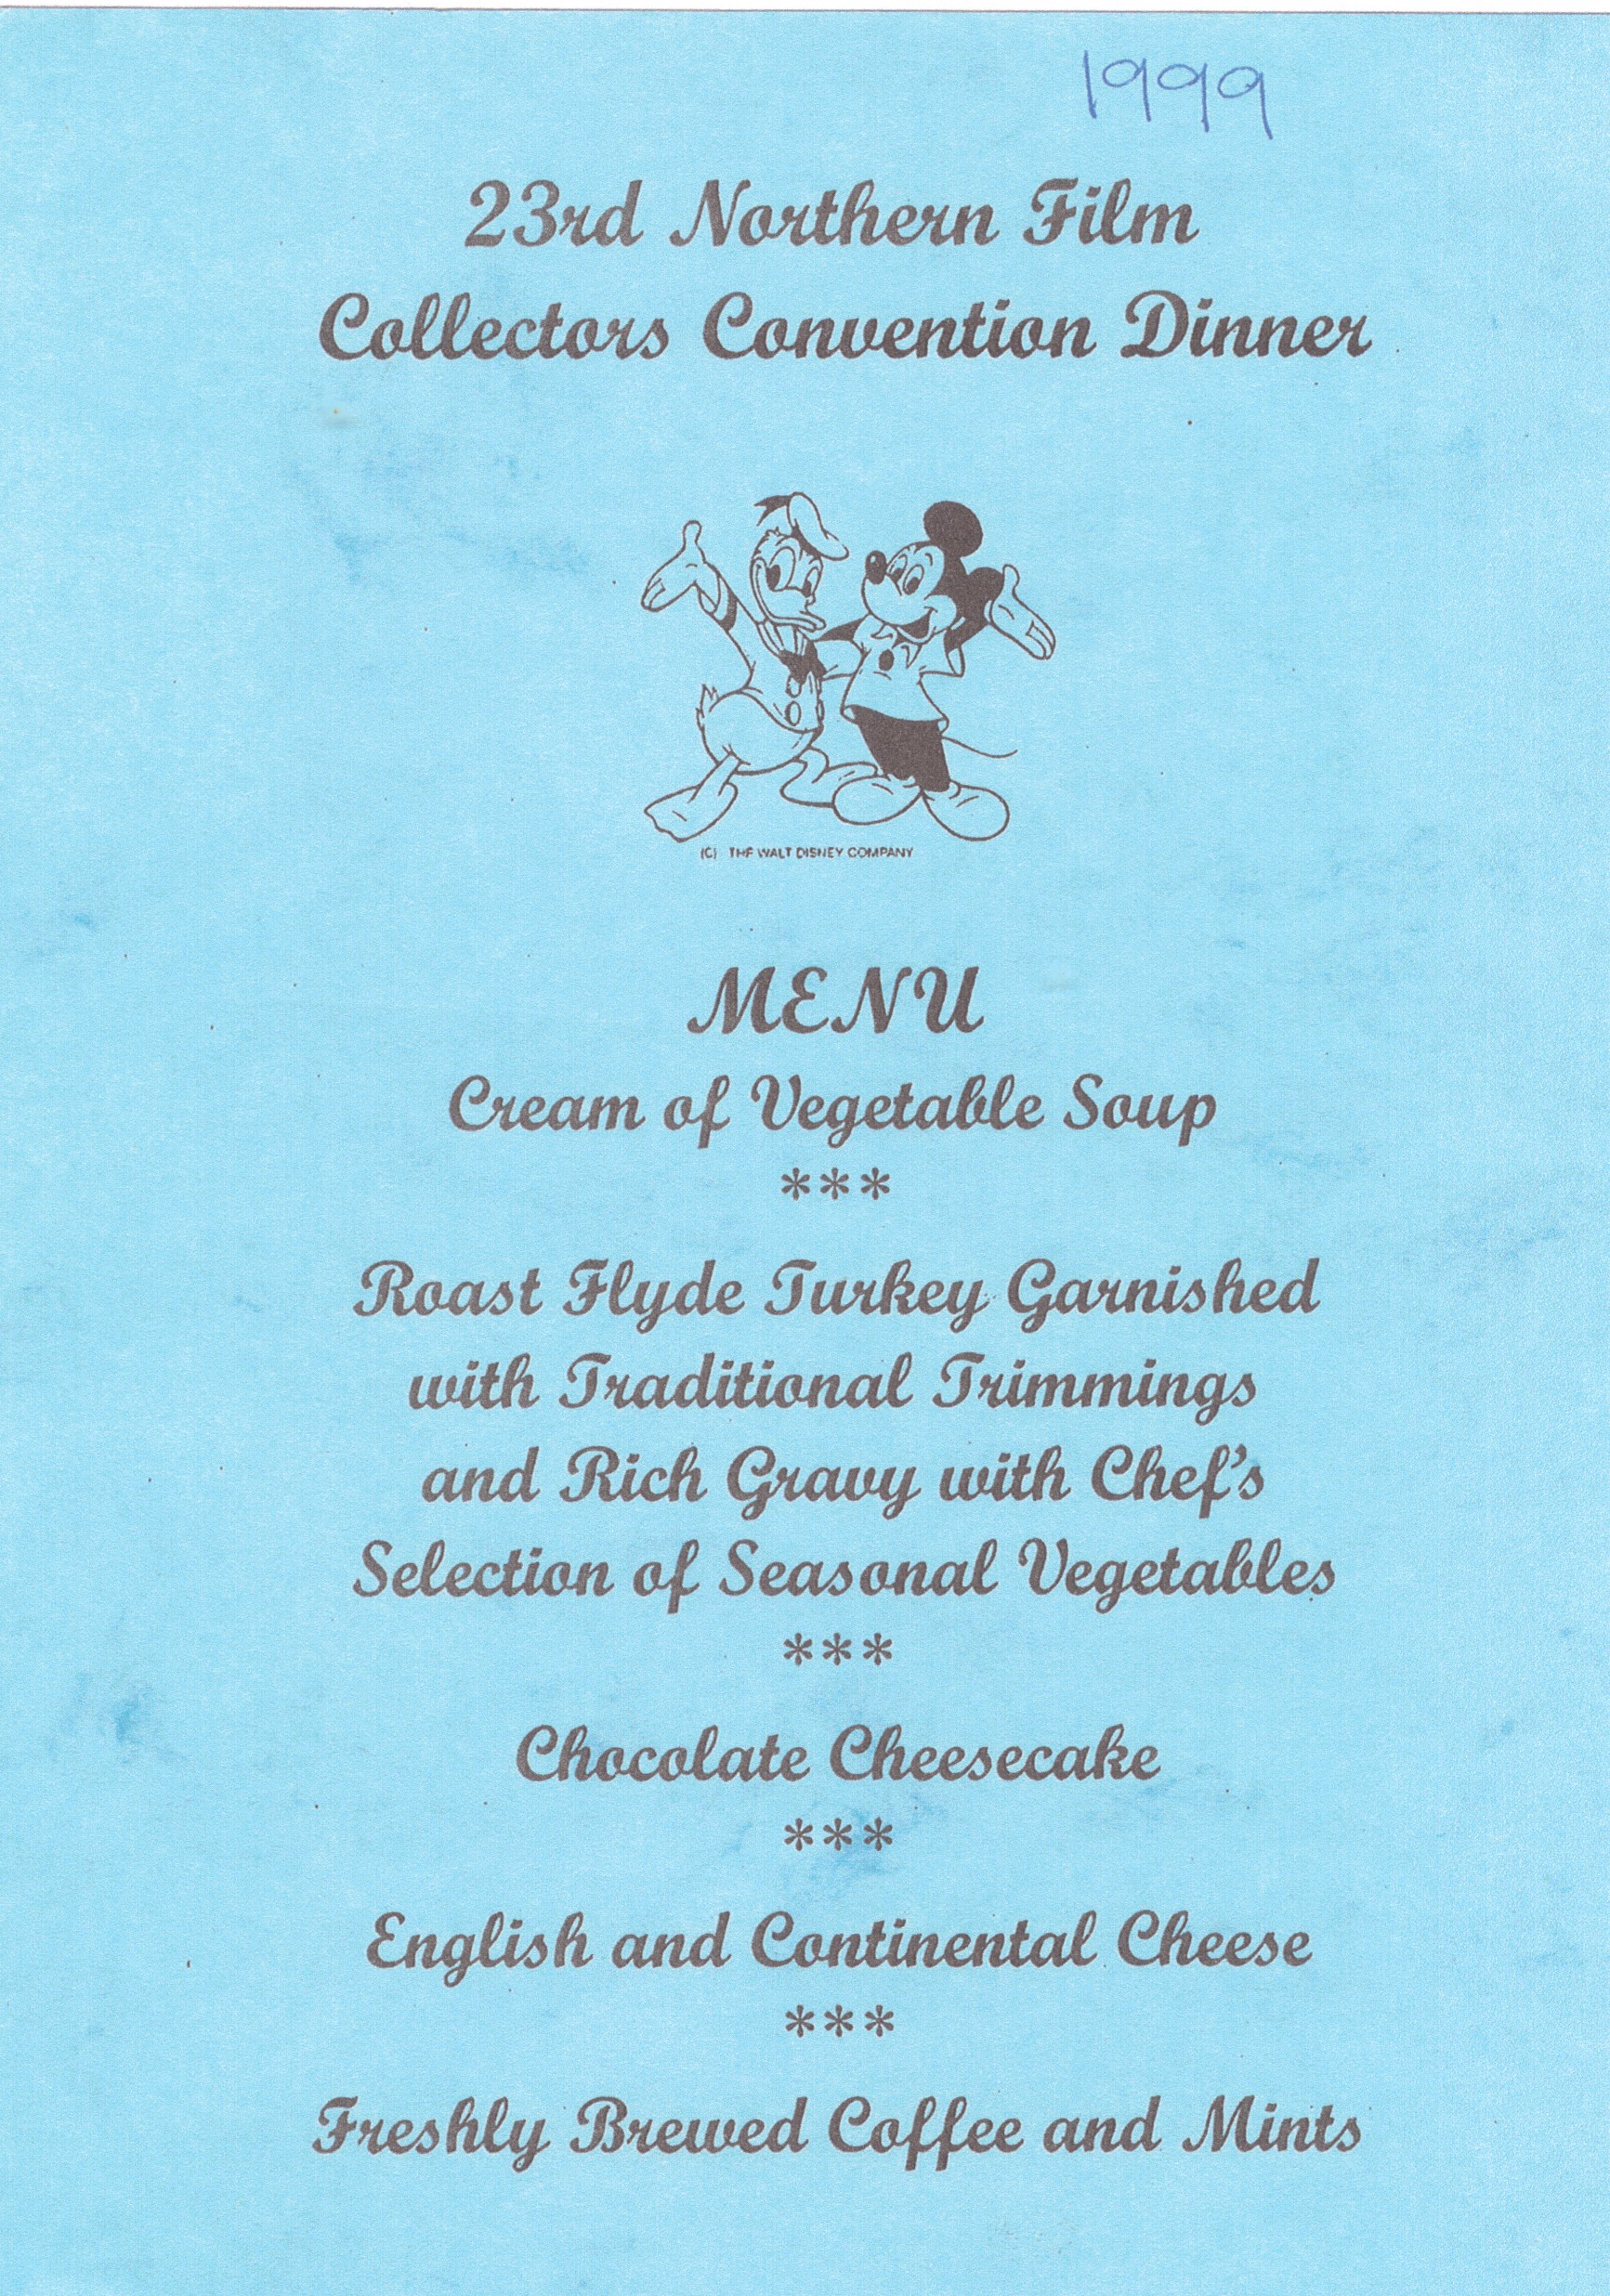 1998 Convention Dinner menu